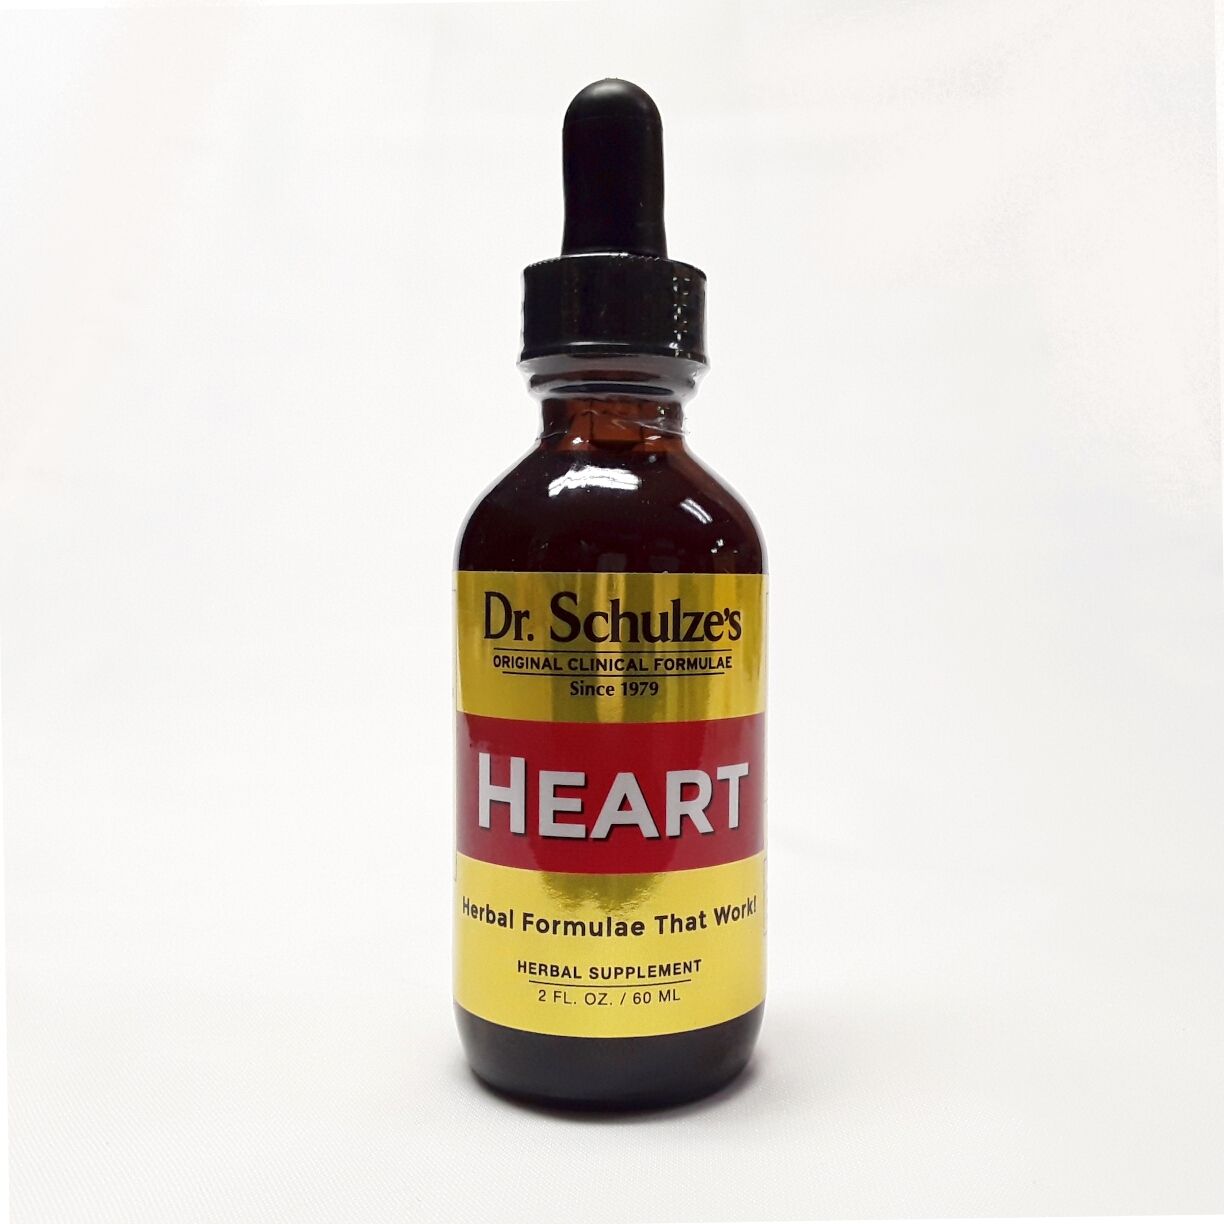 Dr Schulzes Heart Formula Website Product Image View 1